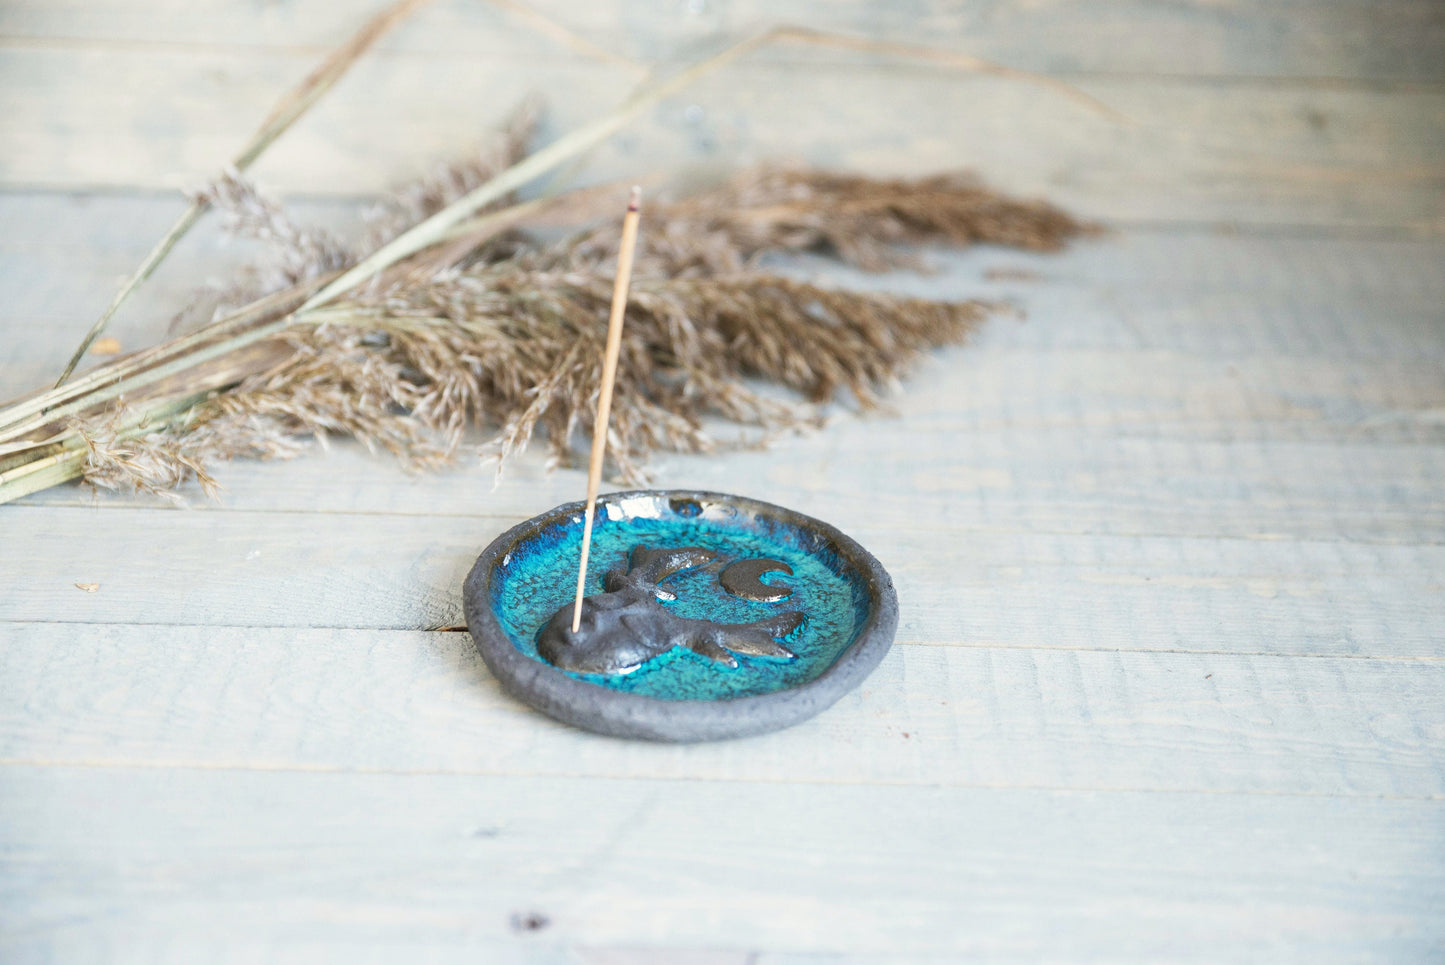 Ceramic incense stick holder with mystic creature - Dark grey frankincense burner plate